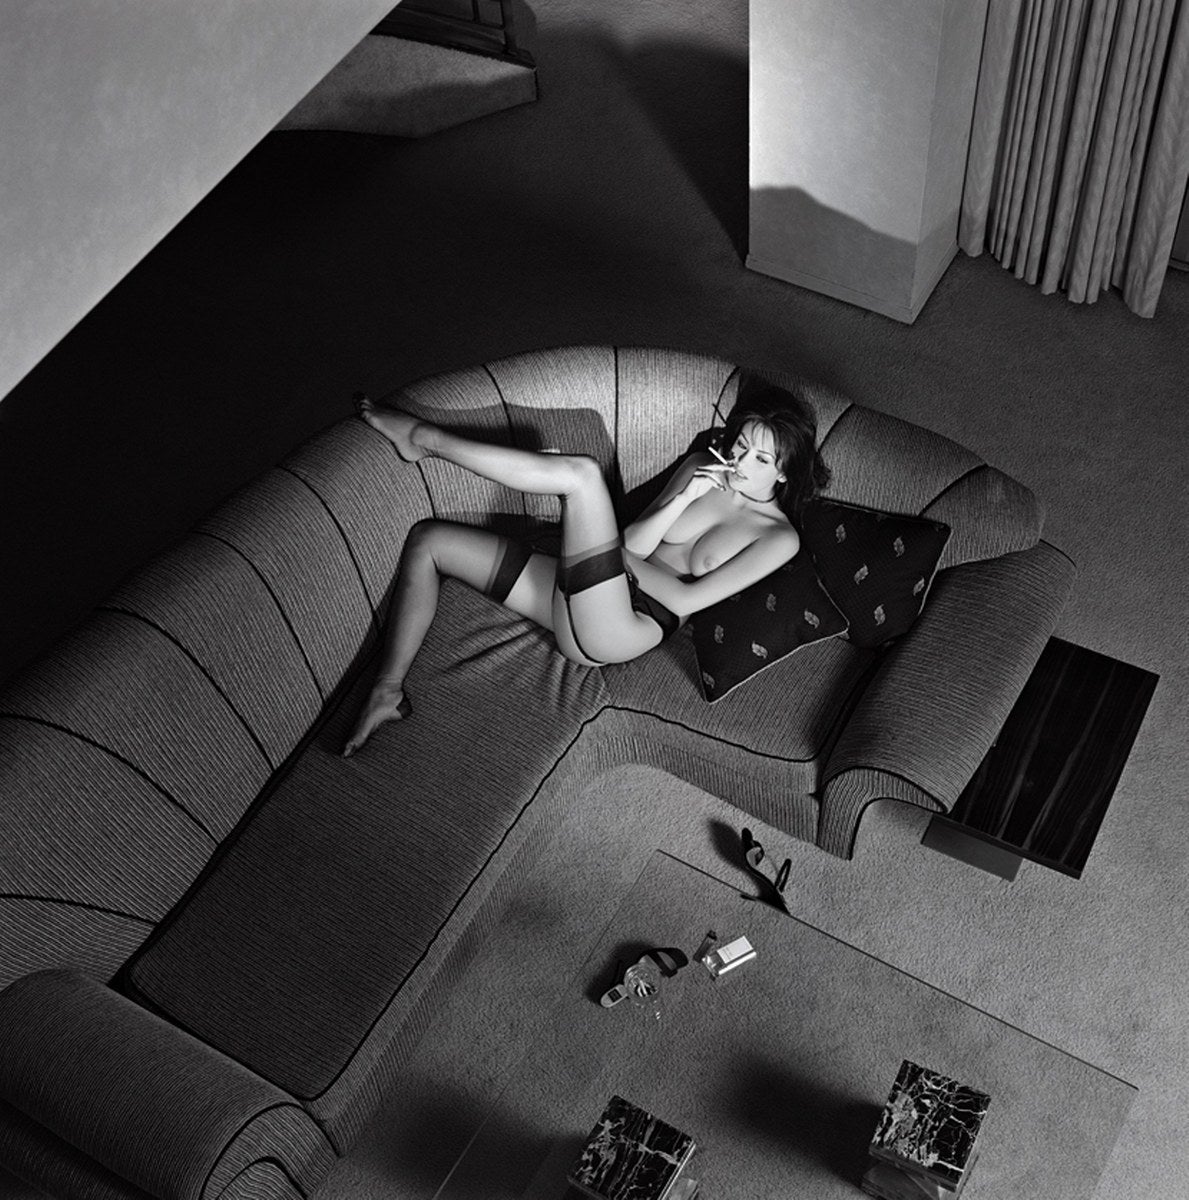 Petra Smoking a Cigarette – Nackte Frau auf einem Sofa, Kunstfotografie, 2012